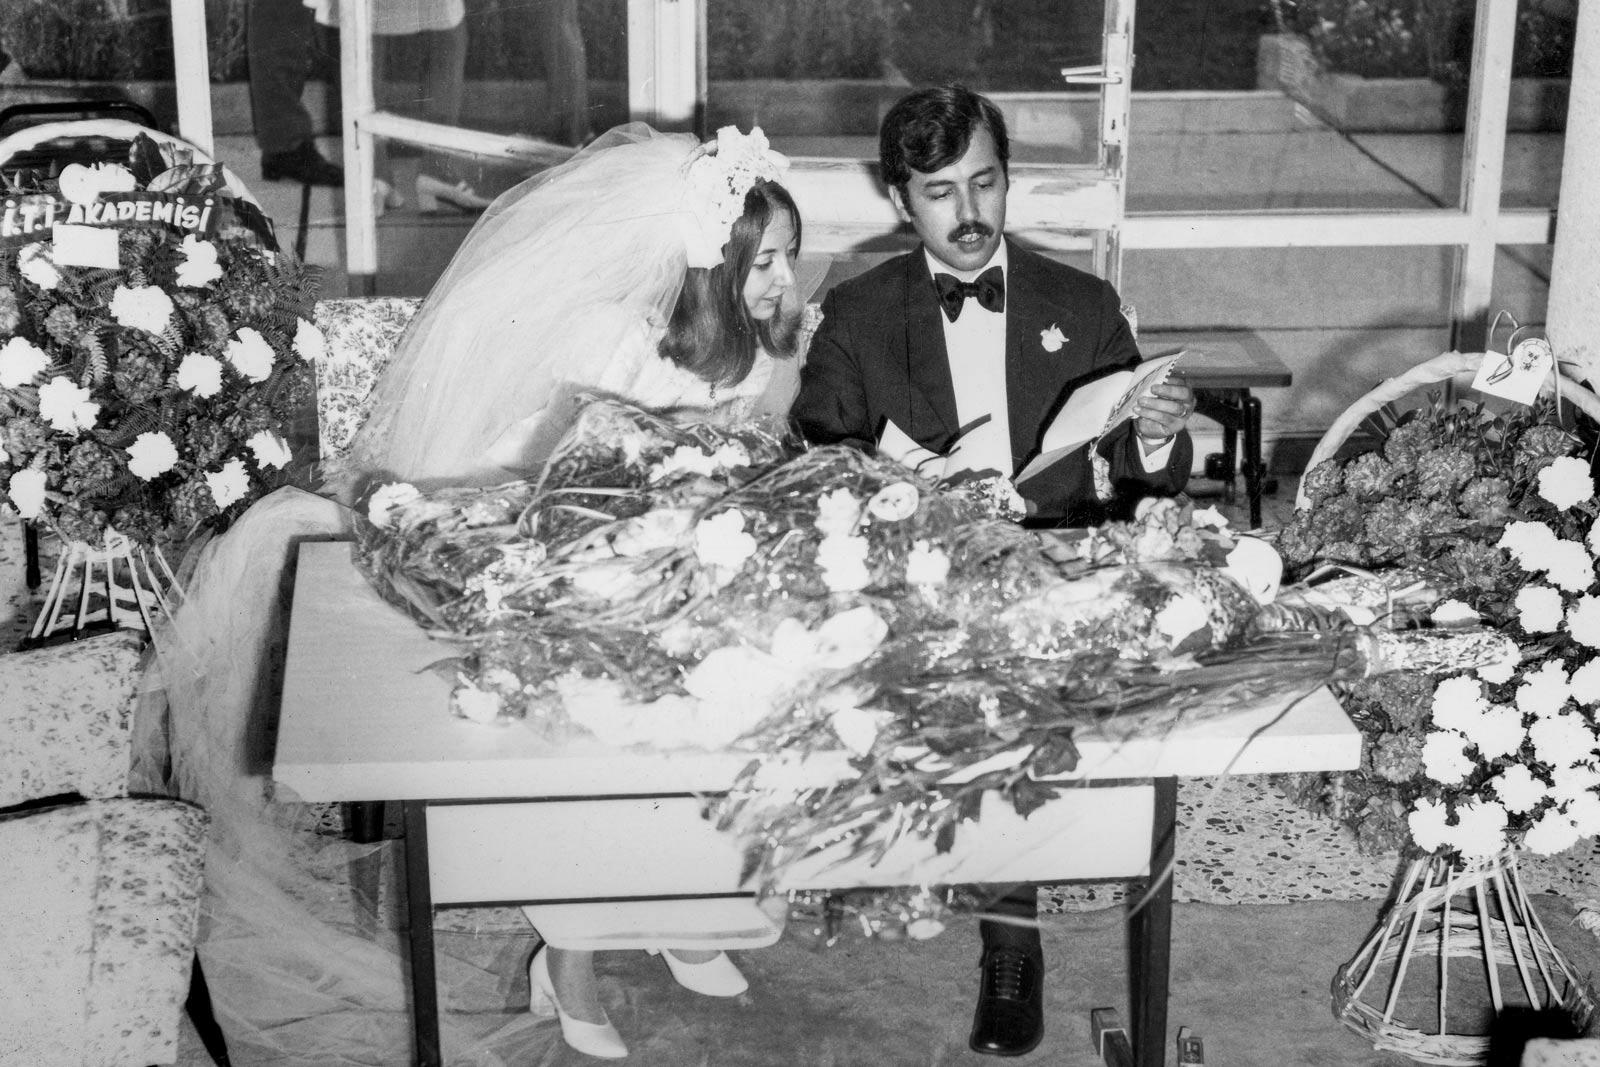 Jan, Cemal wedding day May 20, 1971. Happy anniversary